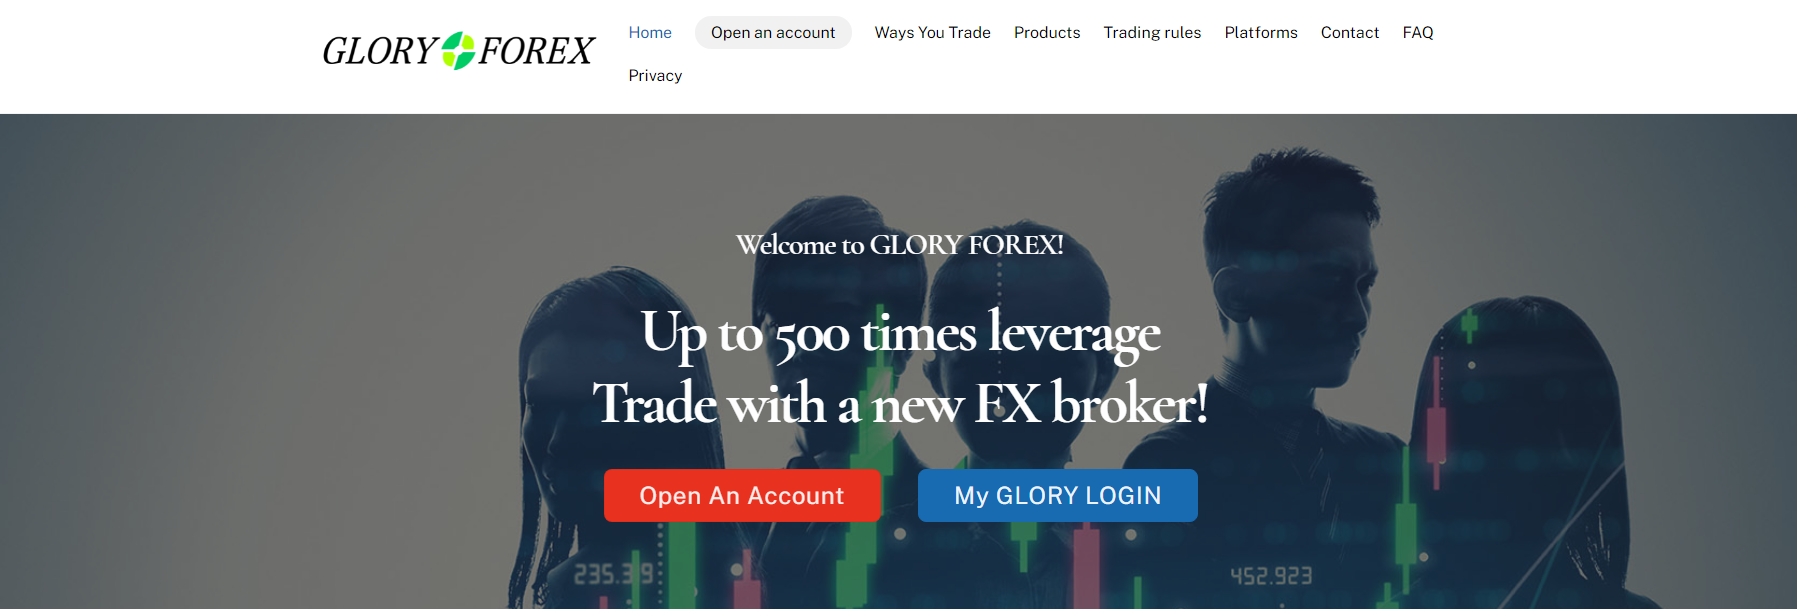 glory forex официальный сайт 